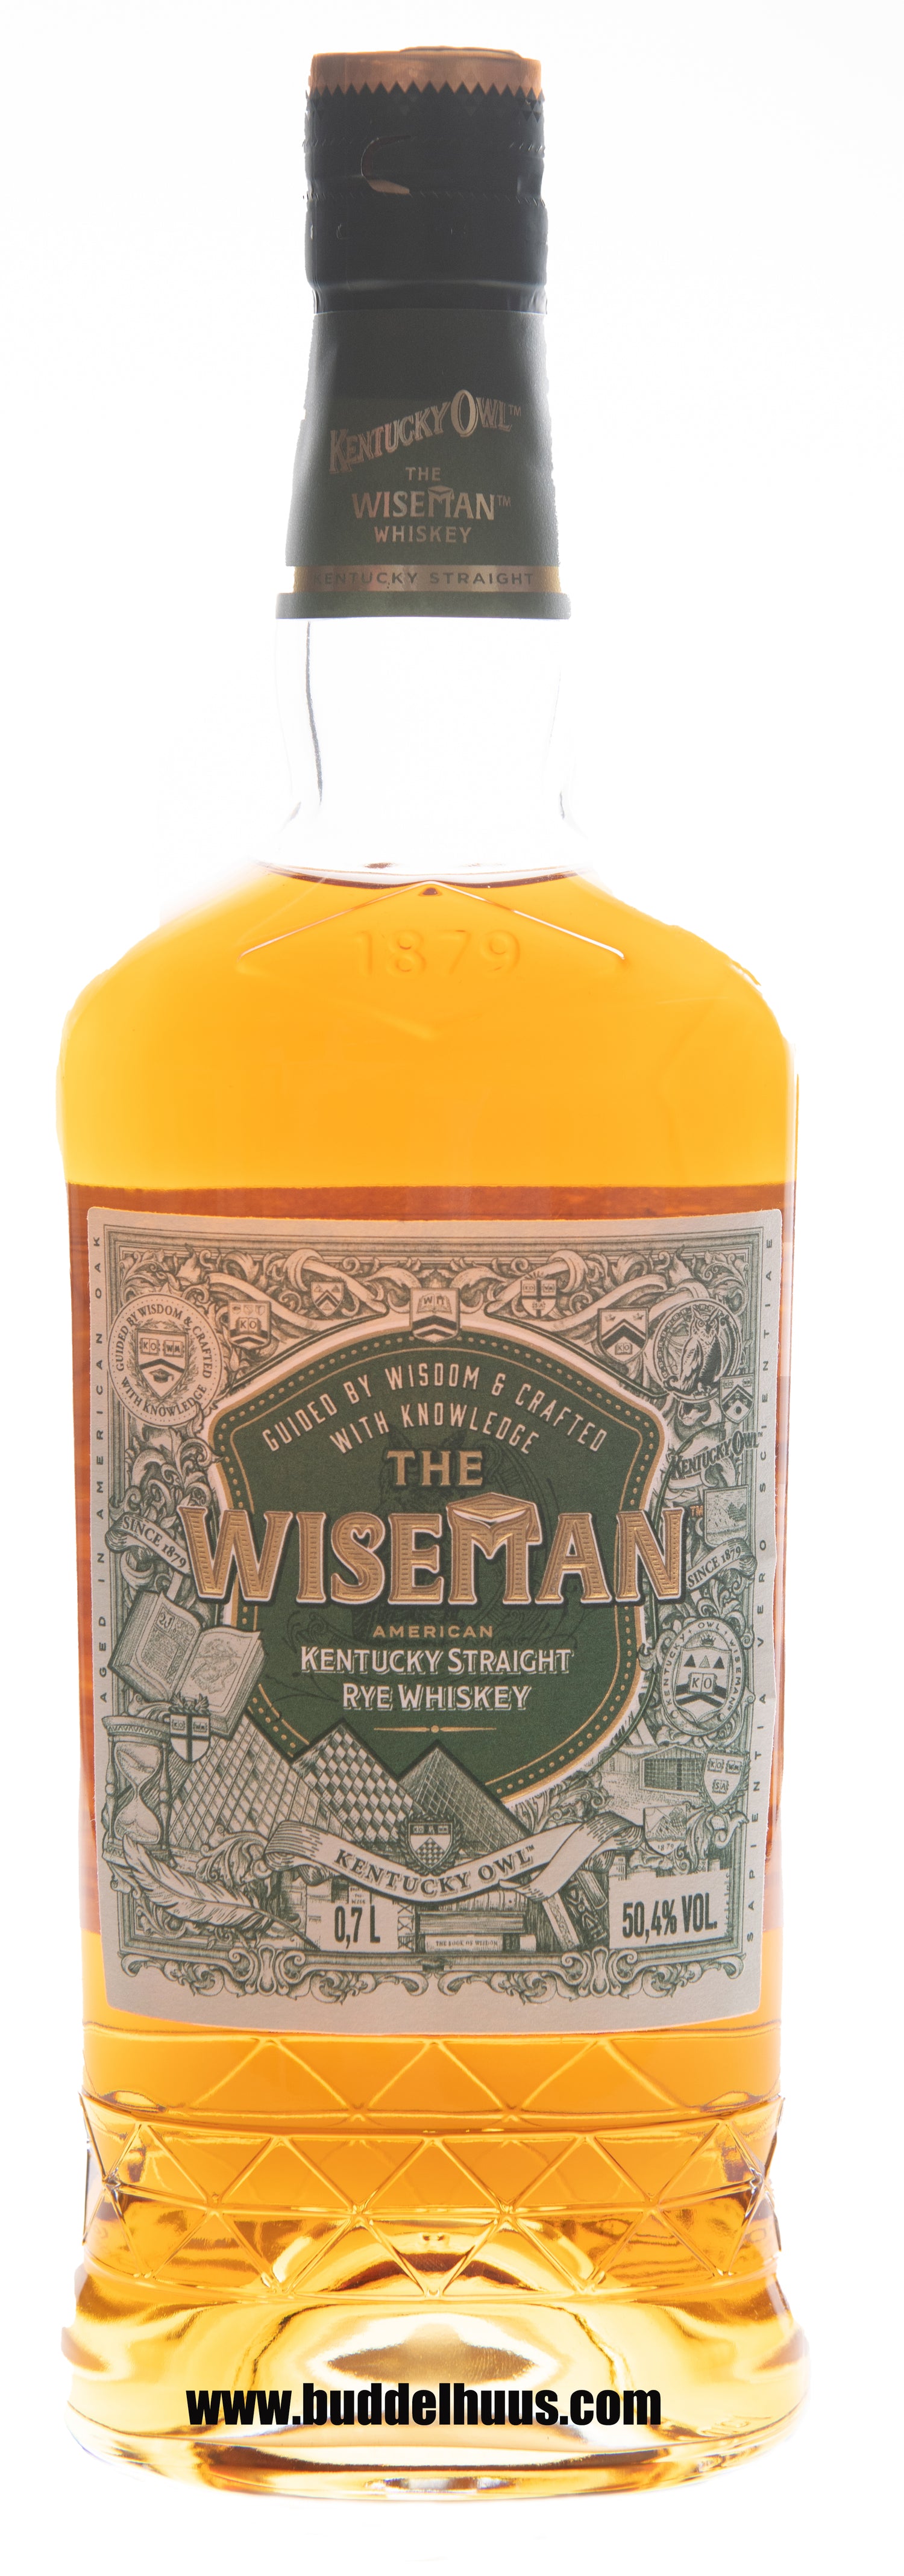 Kentucky Owl Wiseman`s Rye Whiskey